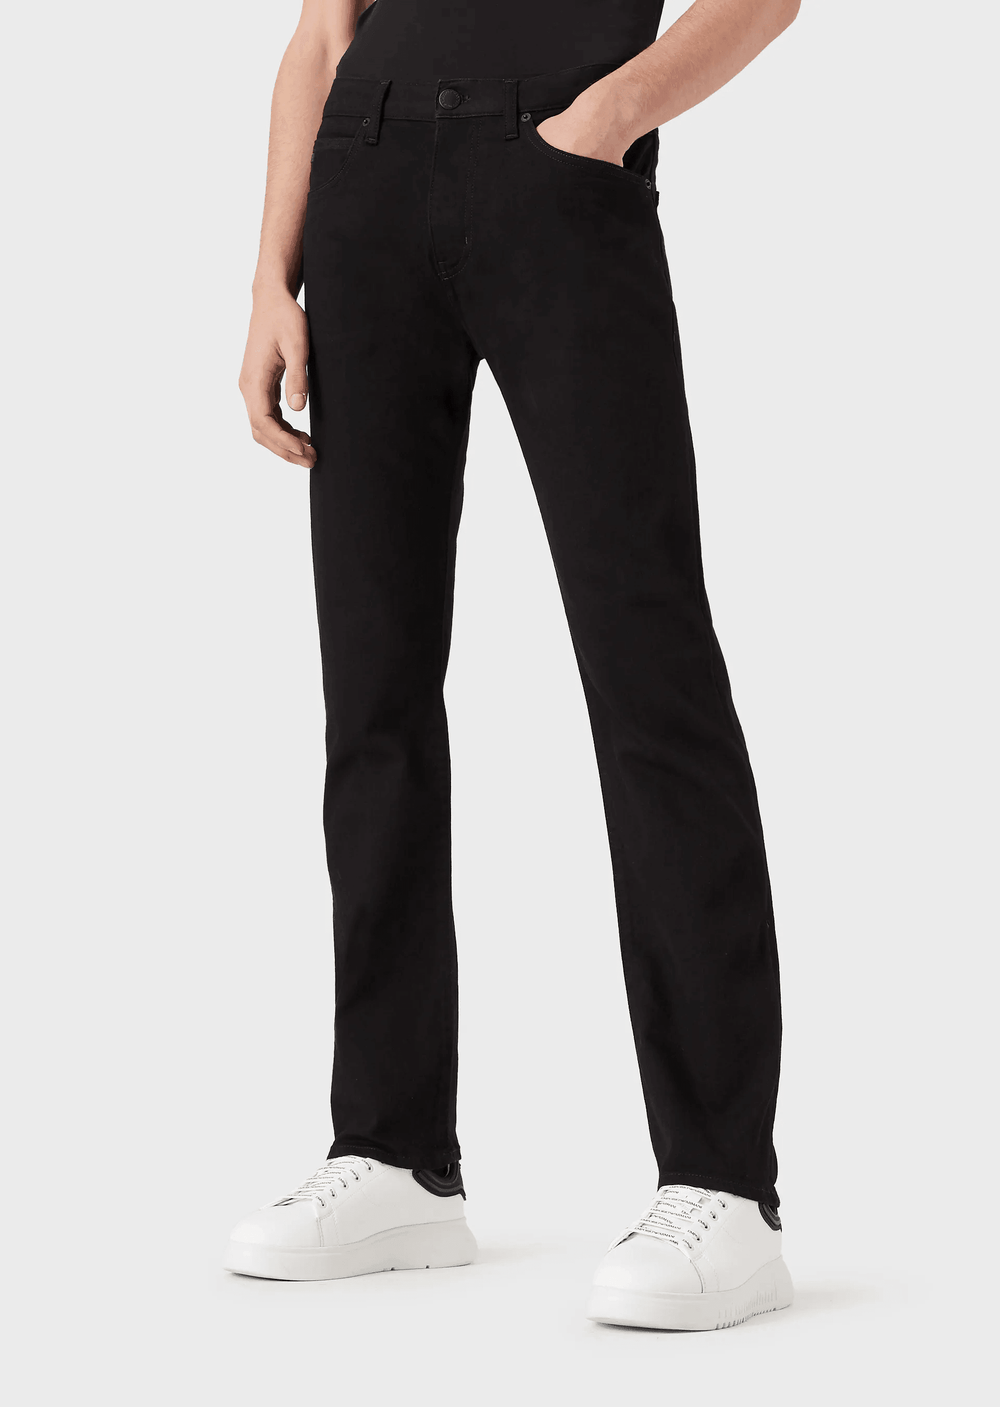 Emporio Armani Jeans J45 Regular Fit Black - Urban Menswear